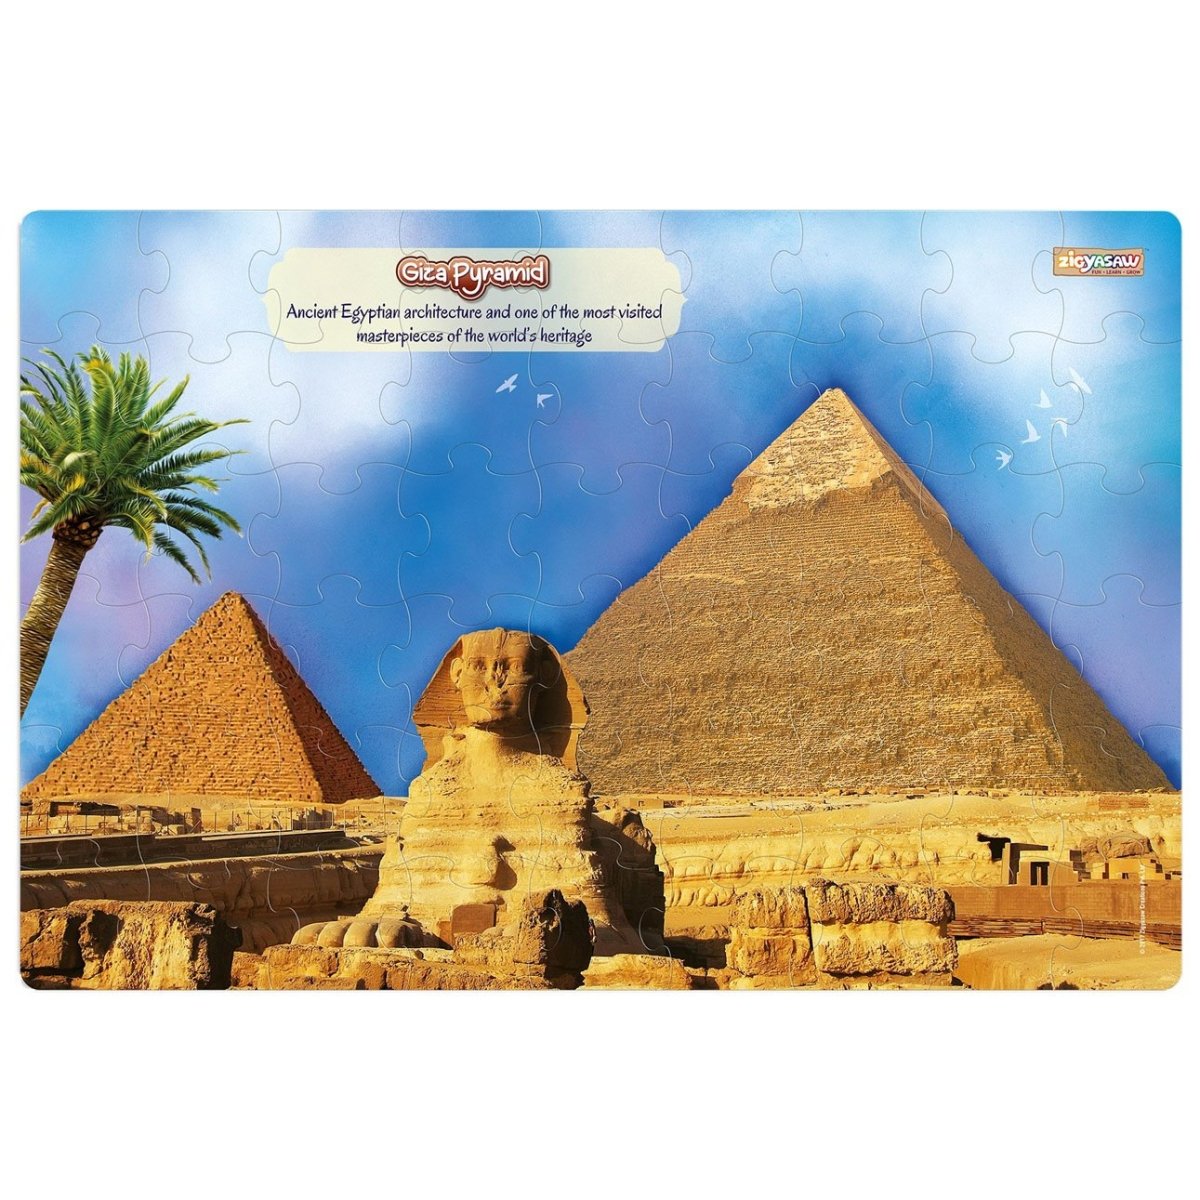 Zigyasaw Giza Pyramid Premium Giant Floor Puzzle Game freeshipping - Zigyasaw